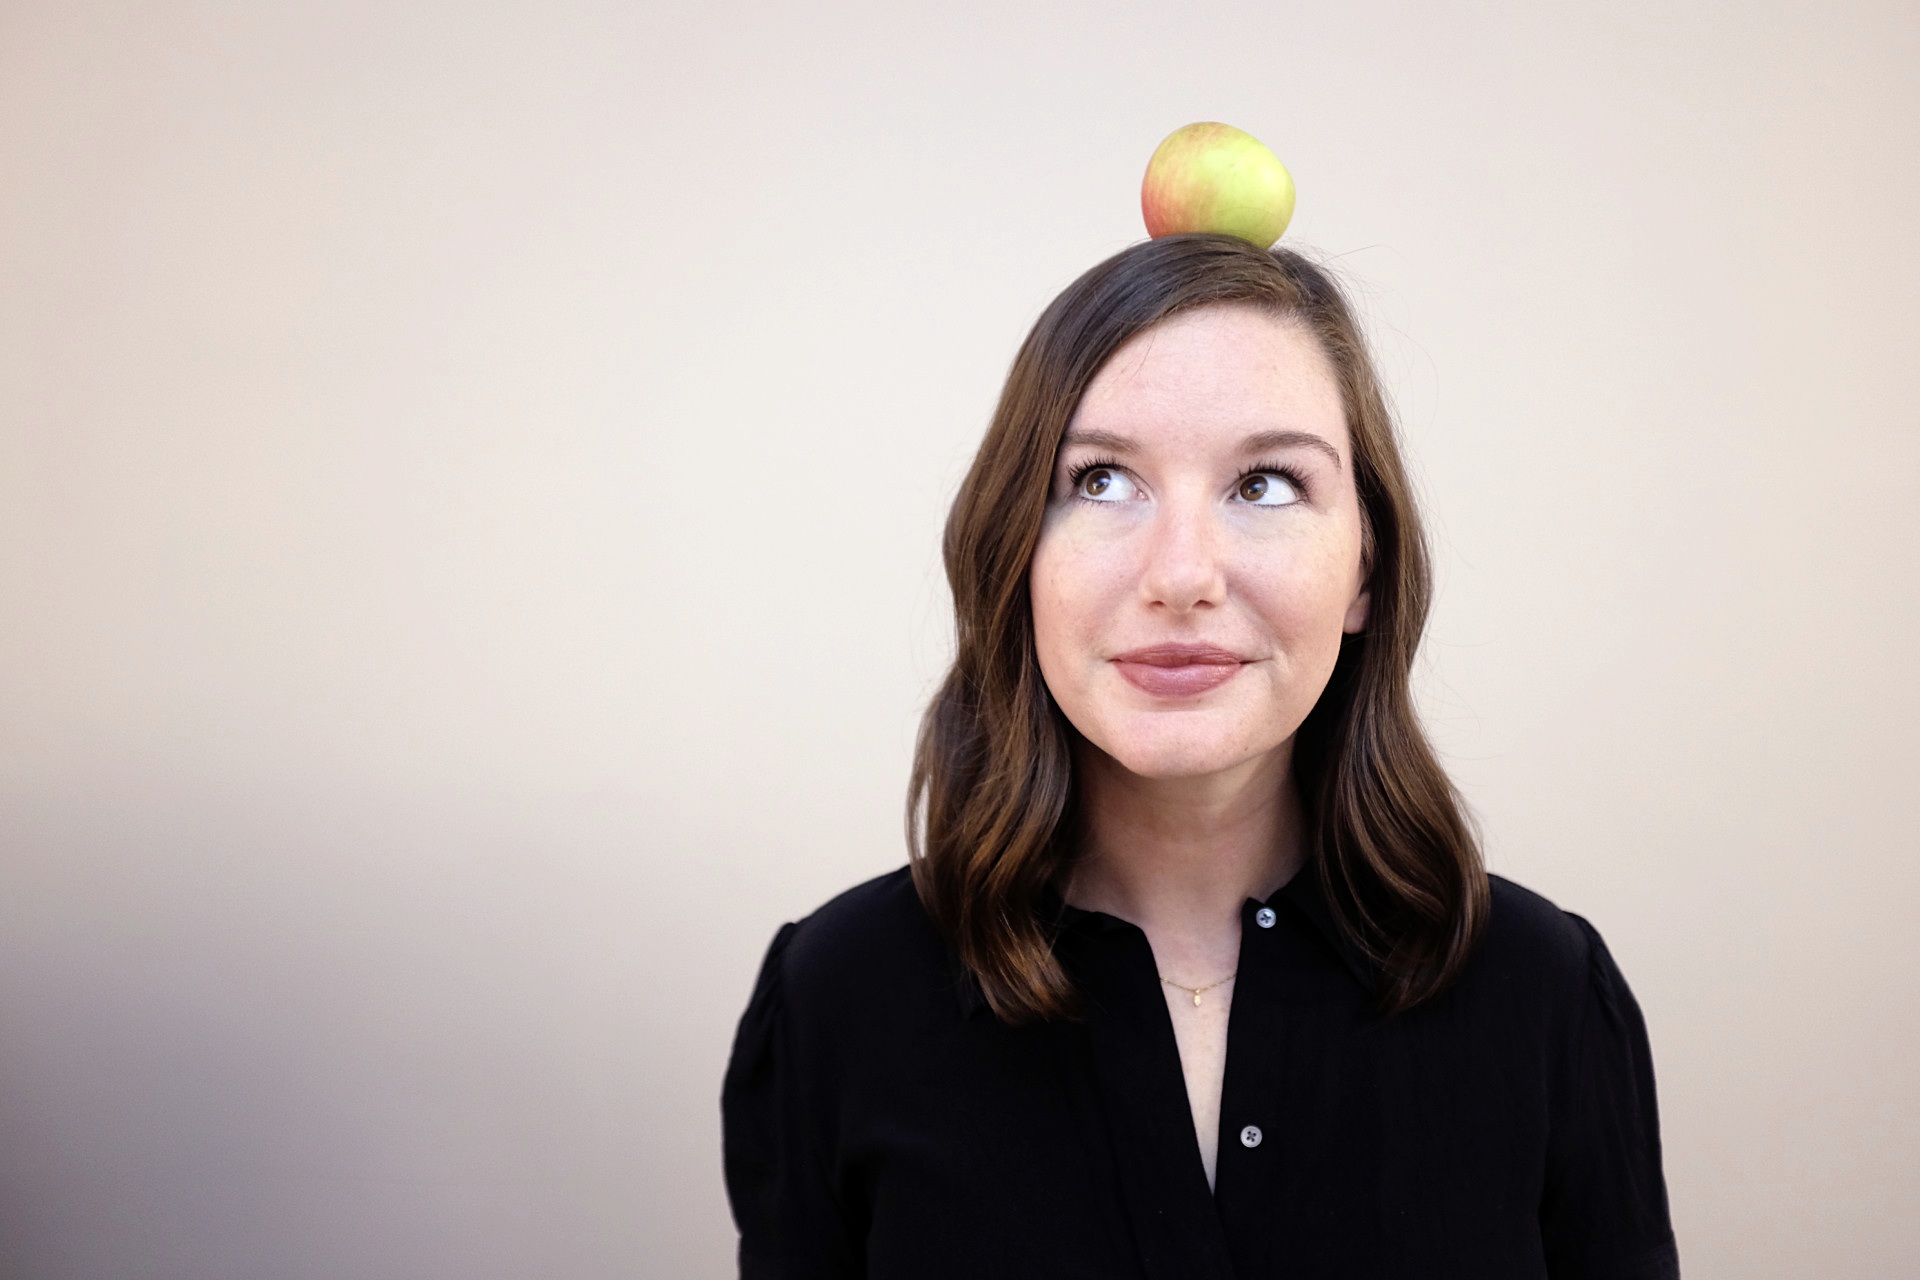 Alyssa with an apple on her head